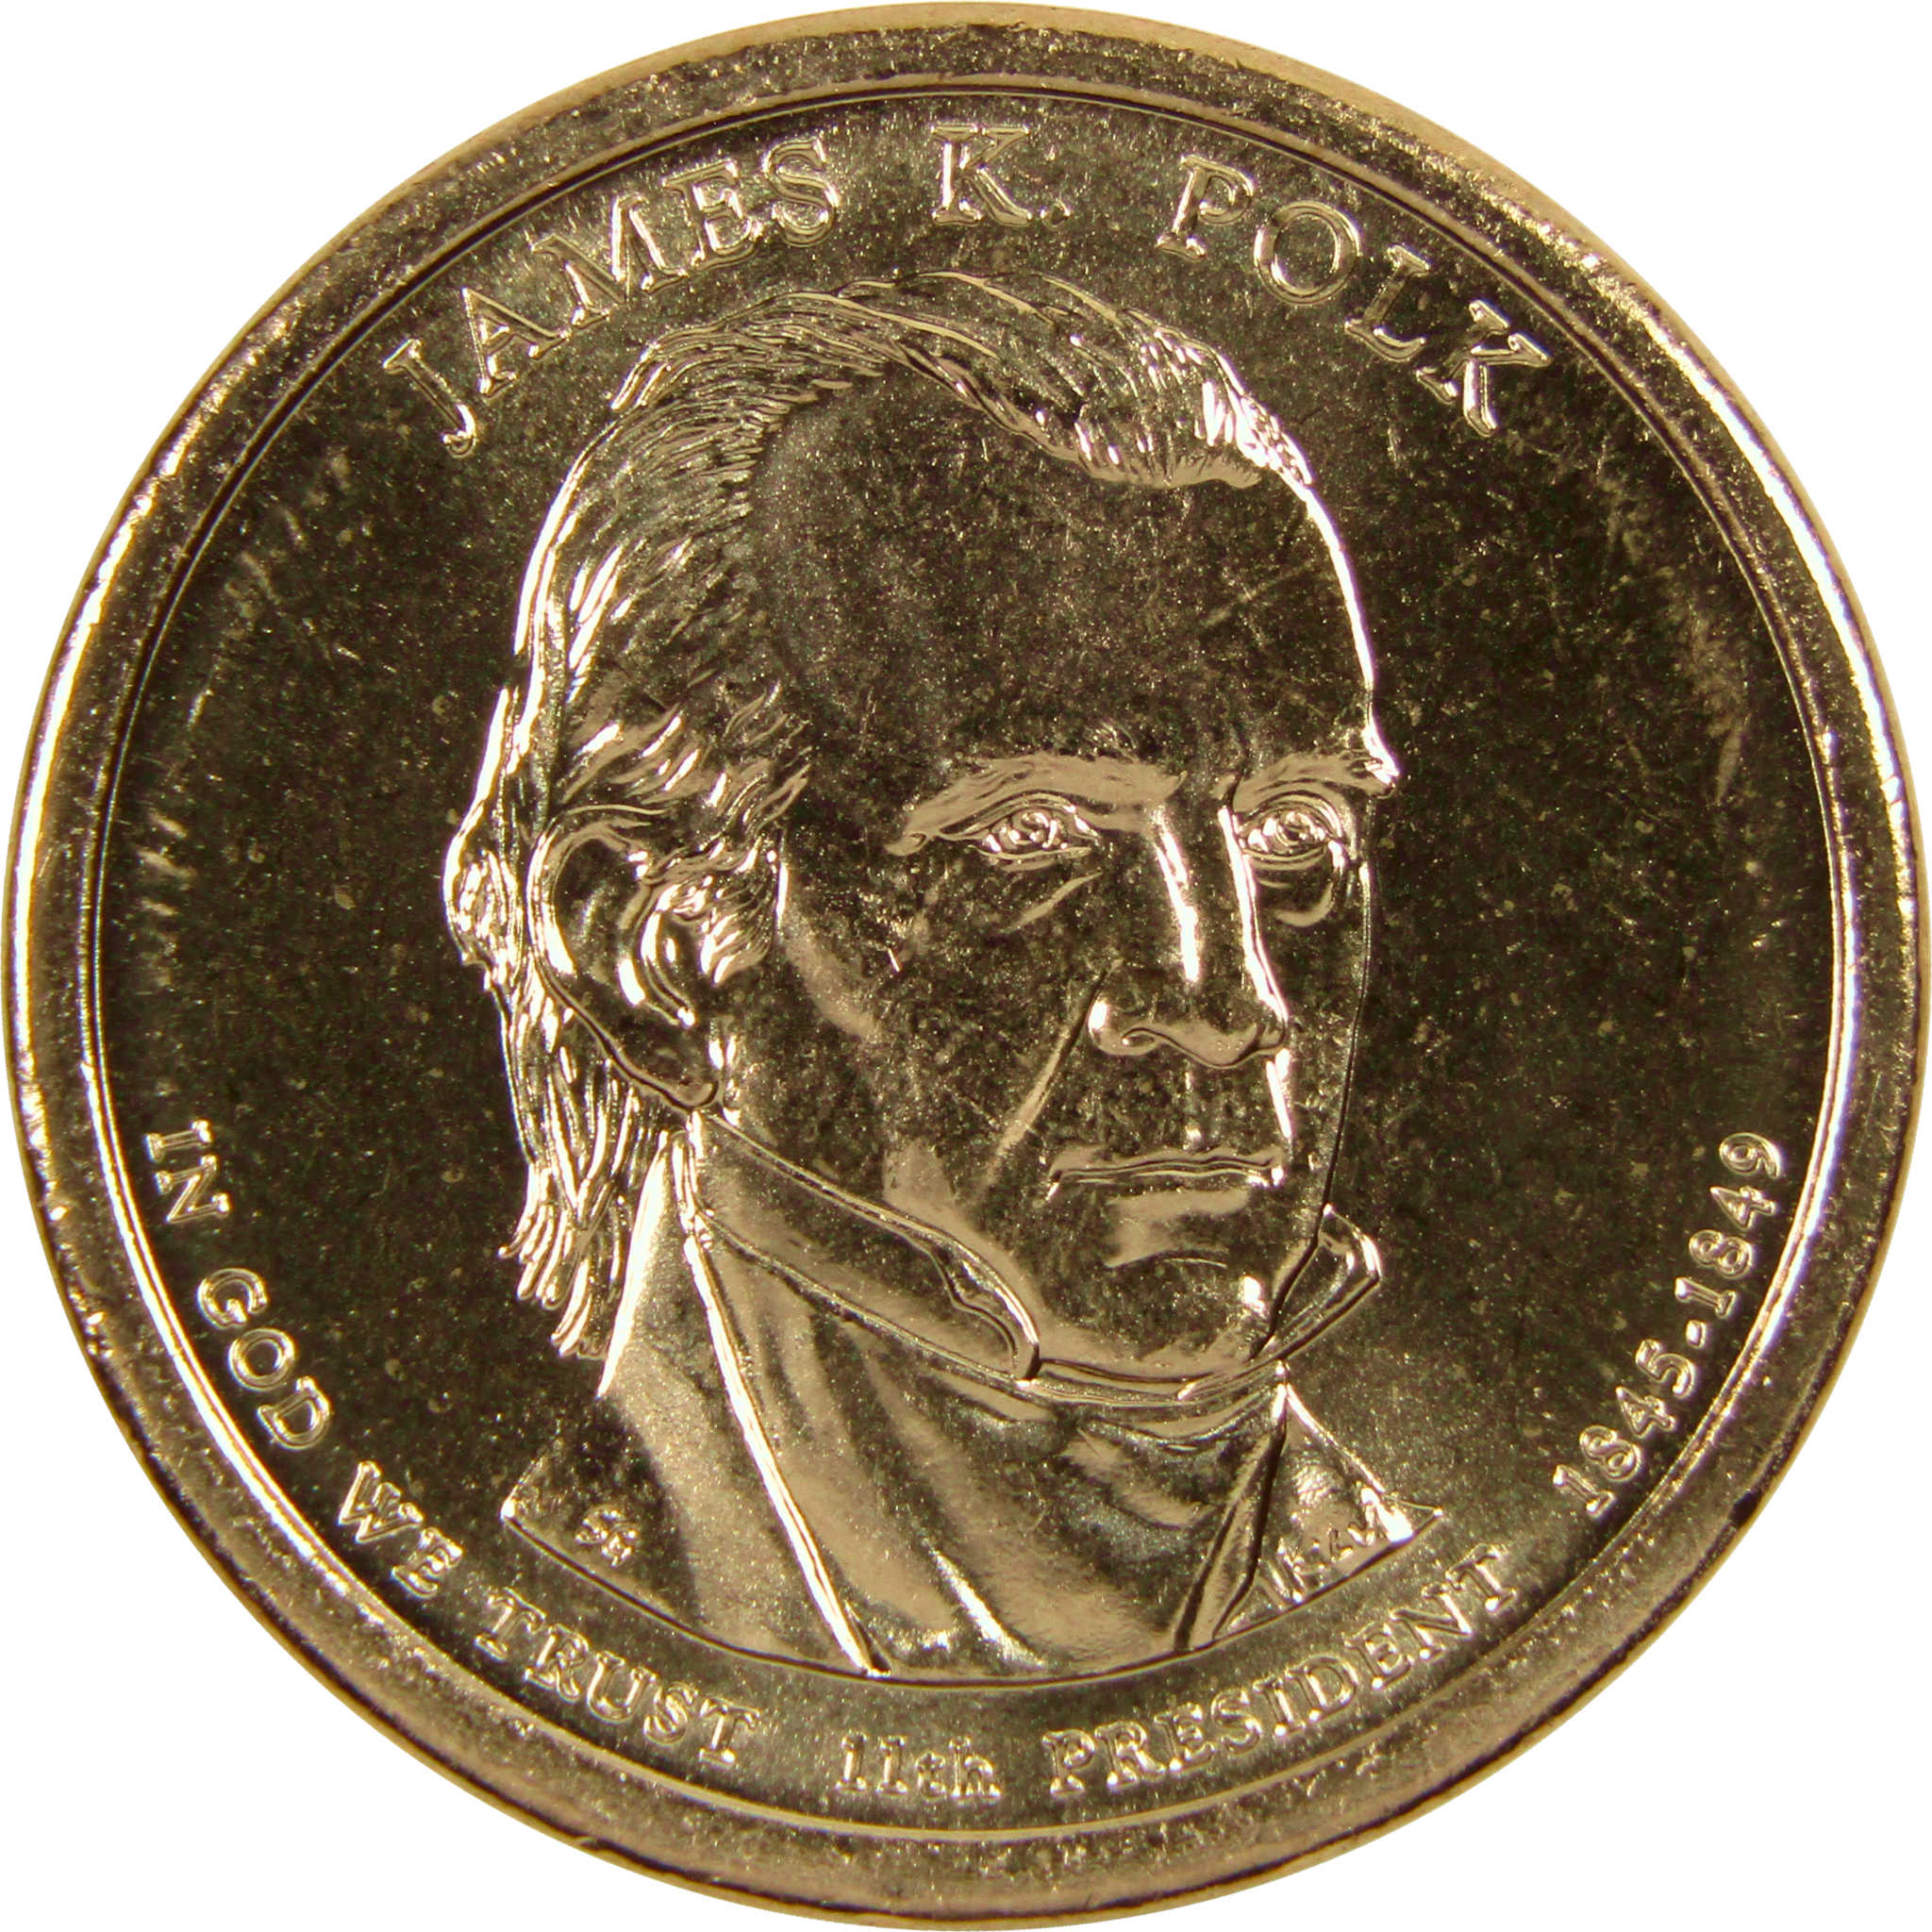 2009 P James K Polk Presidential Dollar BU Uncirculated $1 Coin